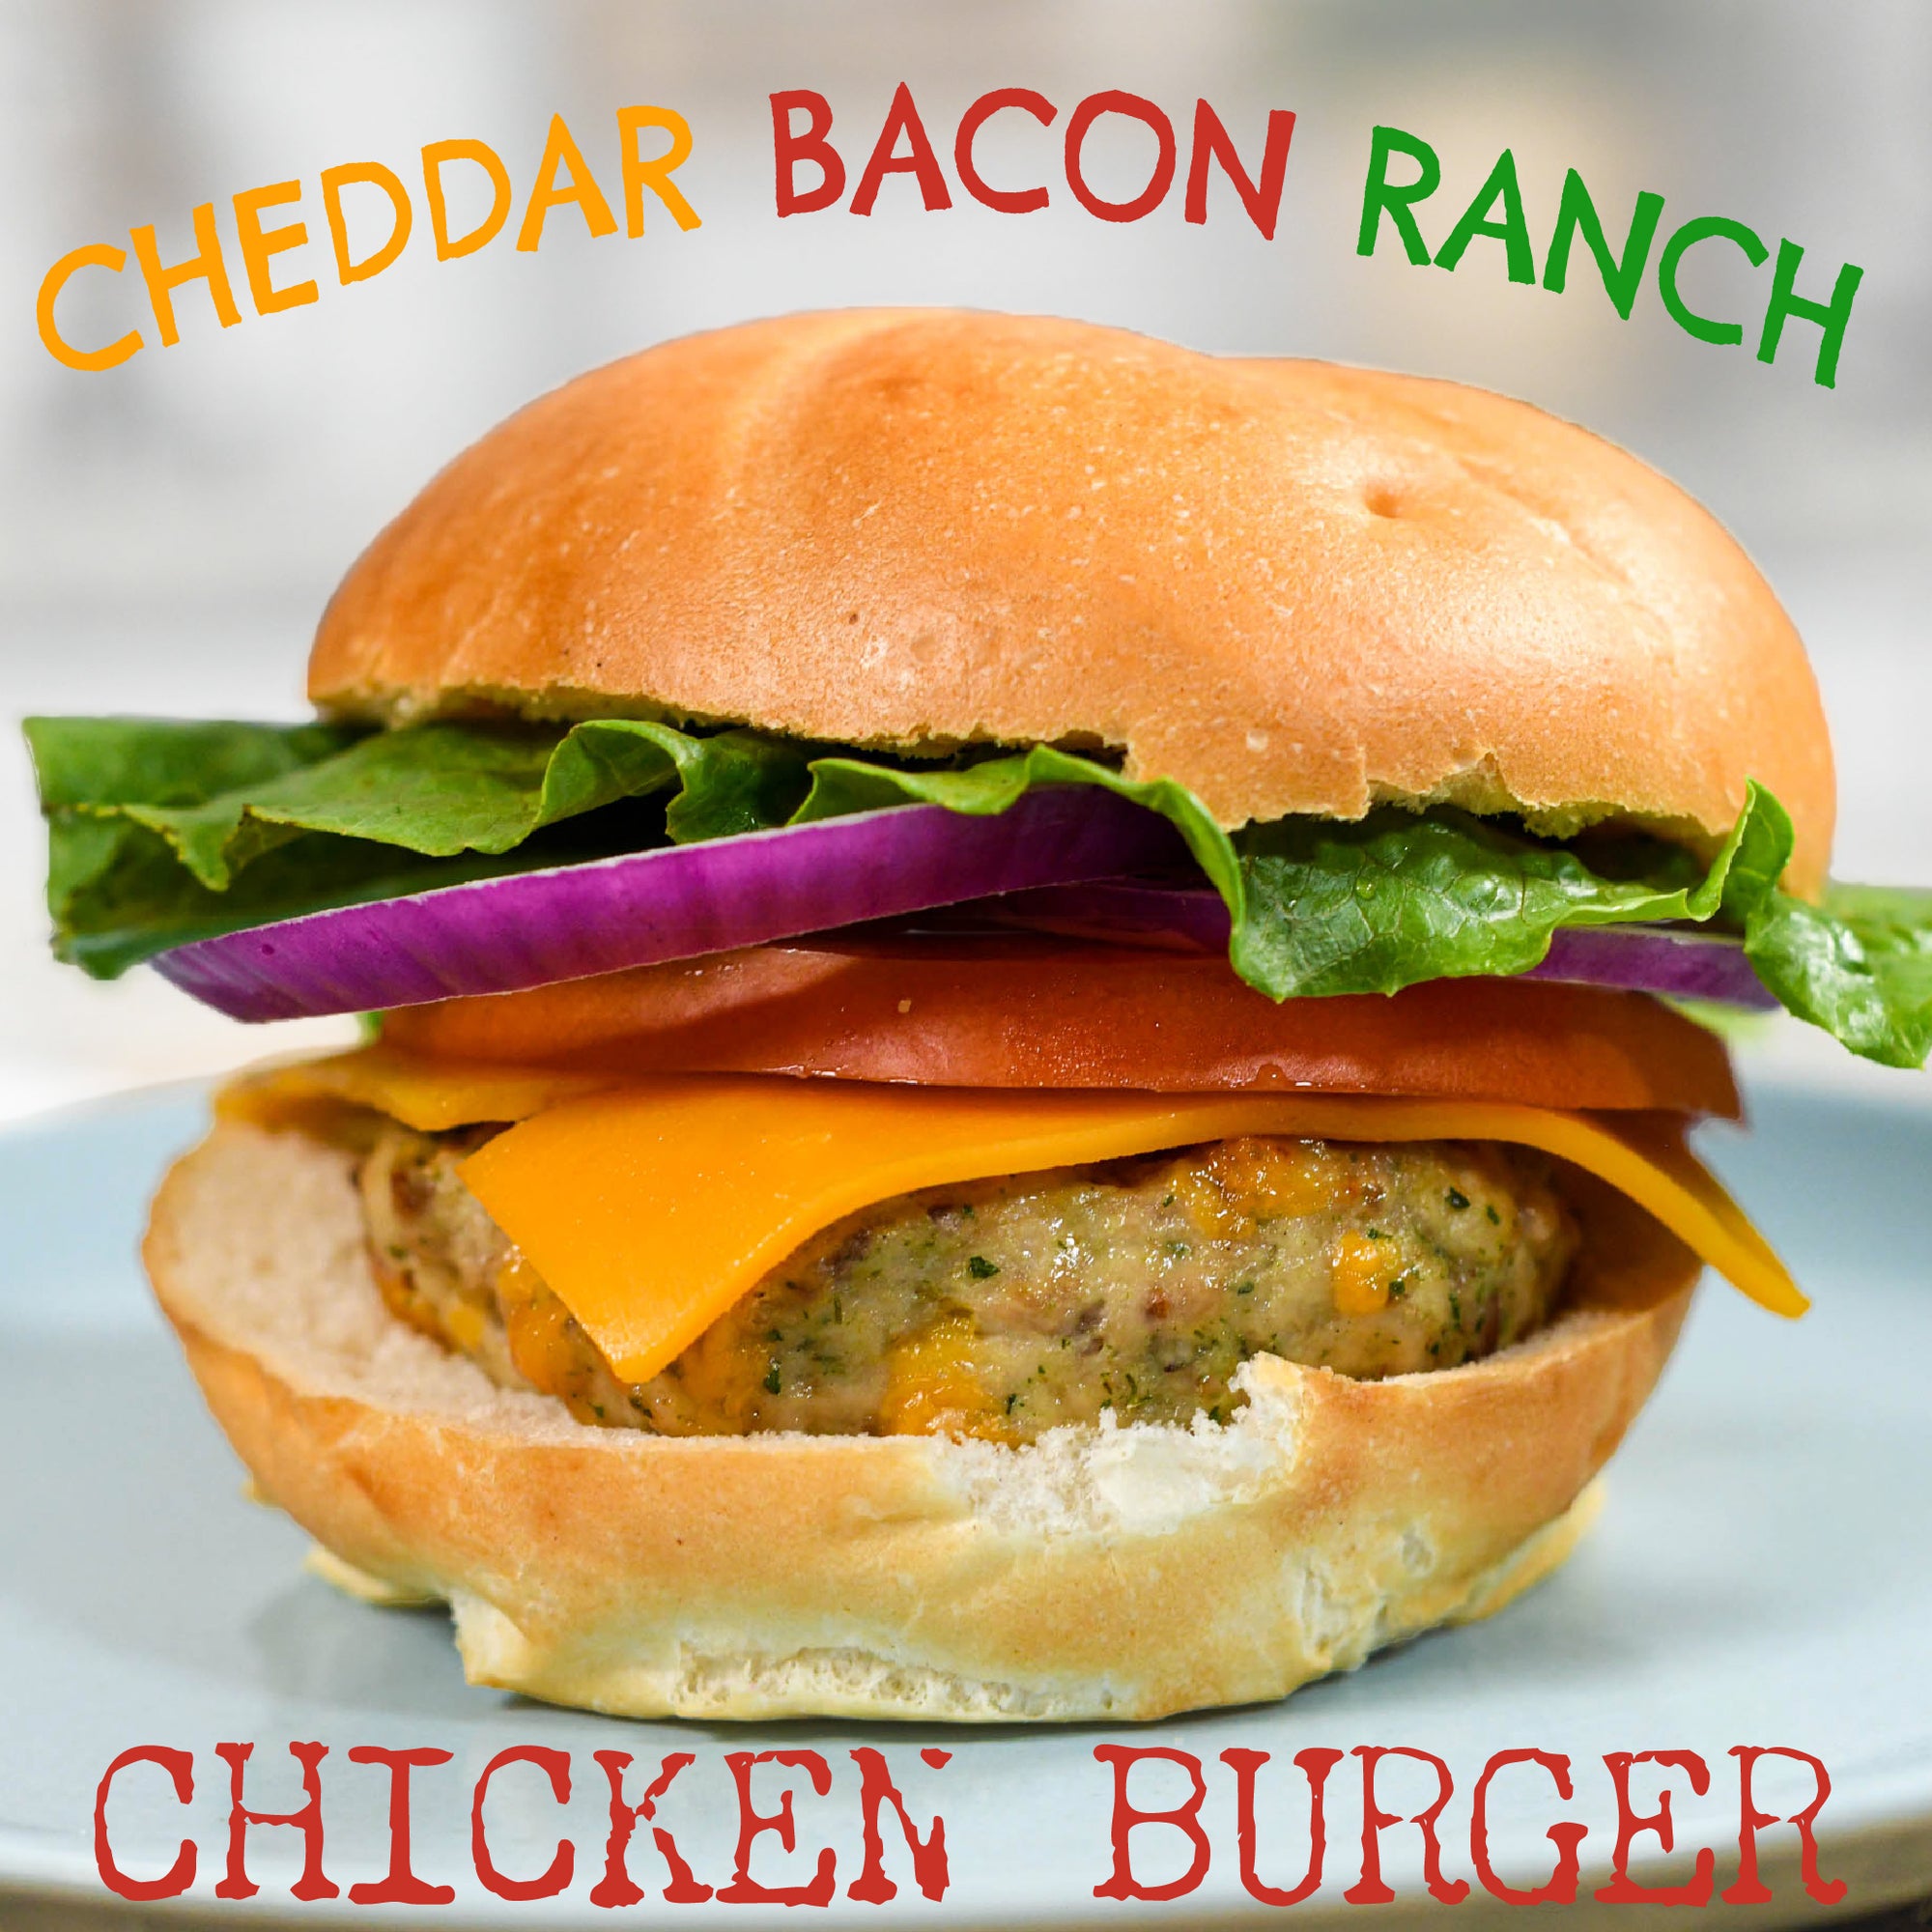 Cheddar Bacon Ranch Chicken Burger